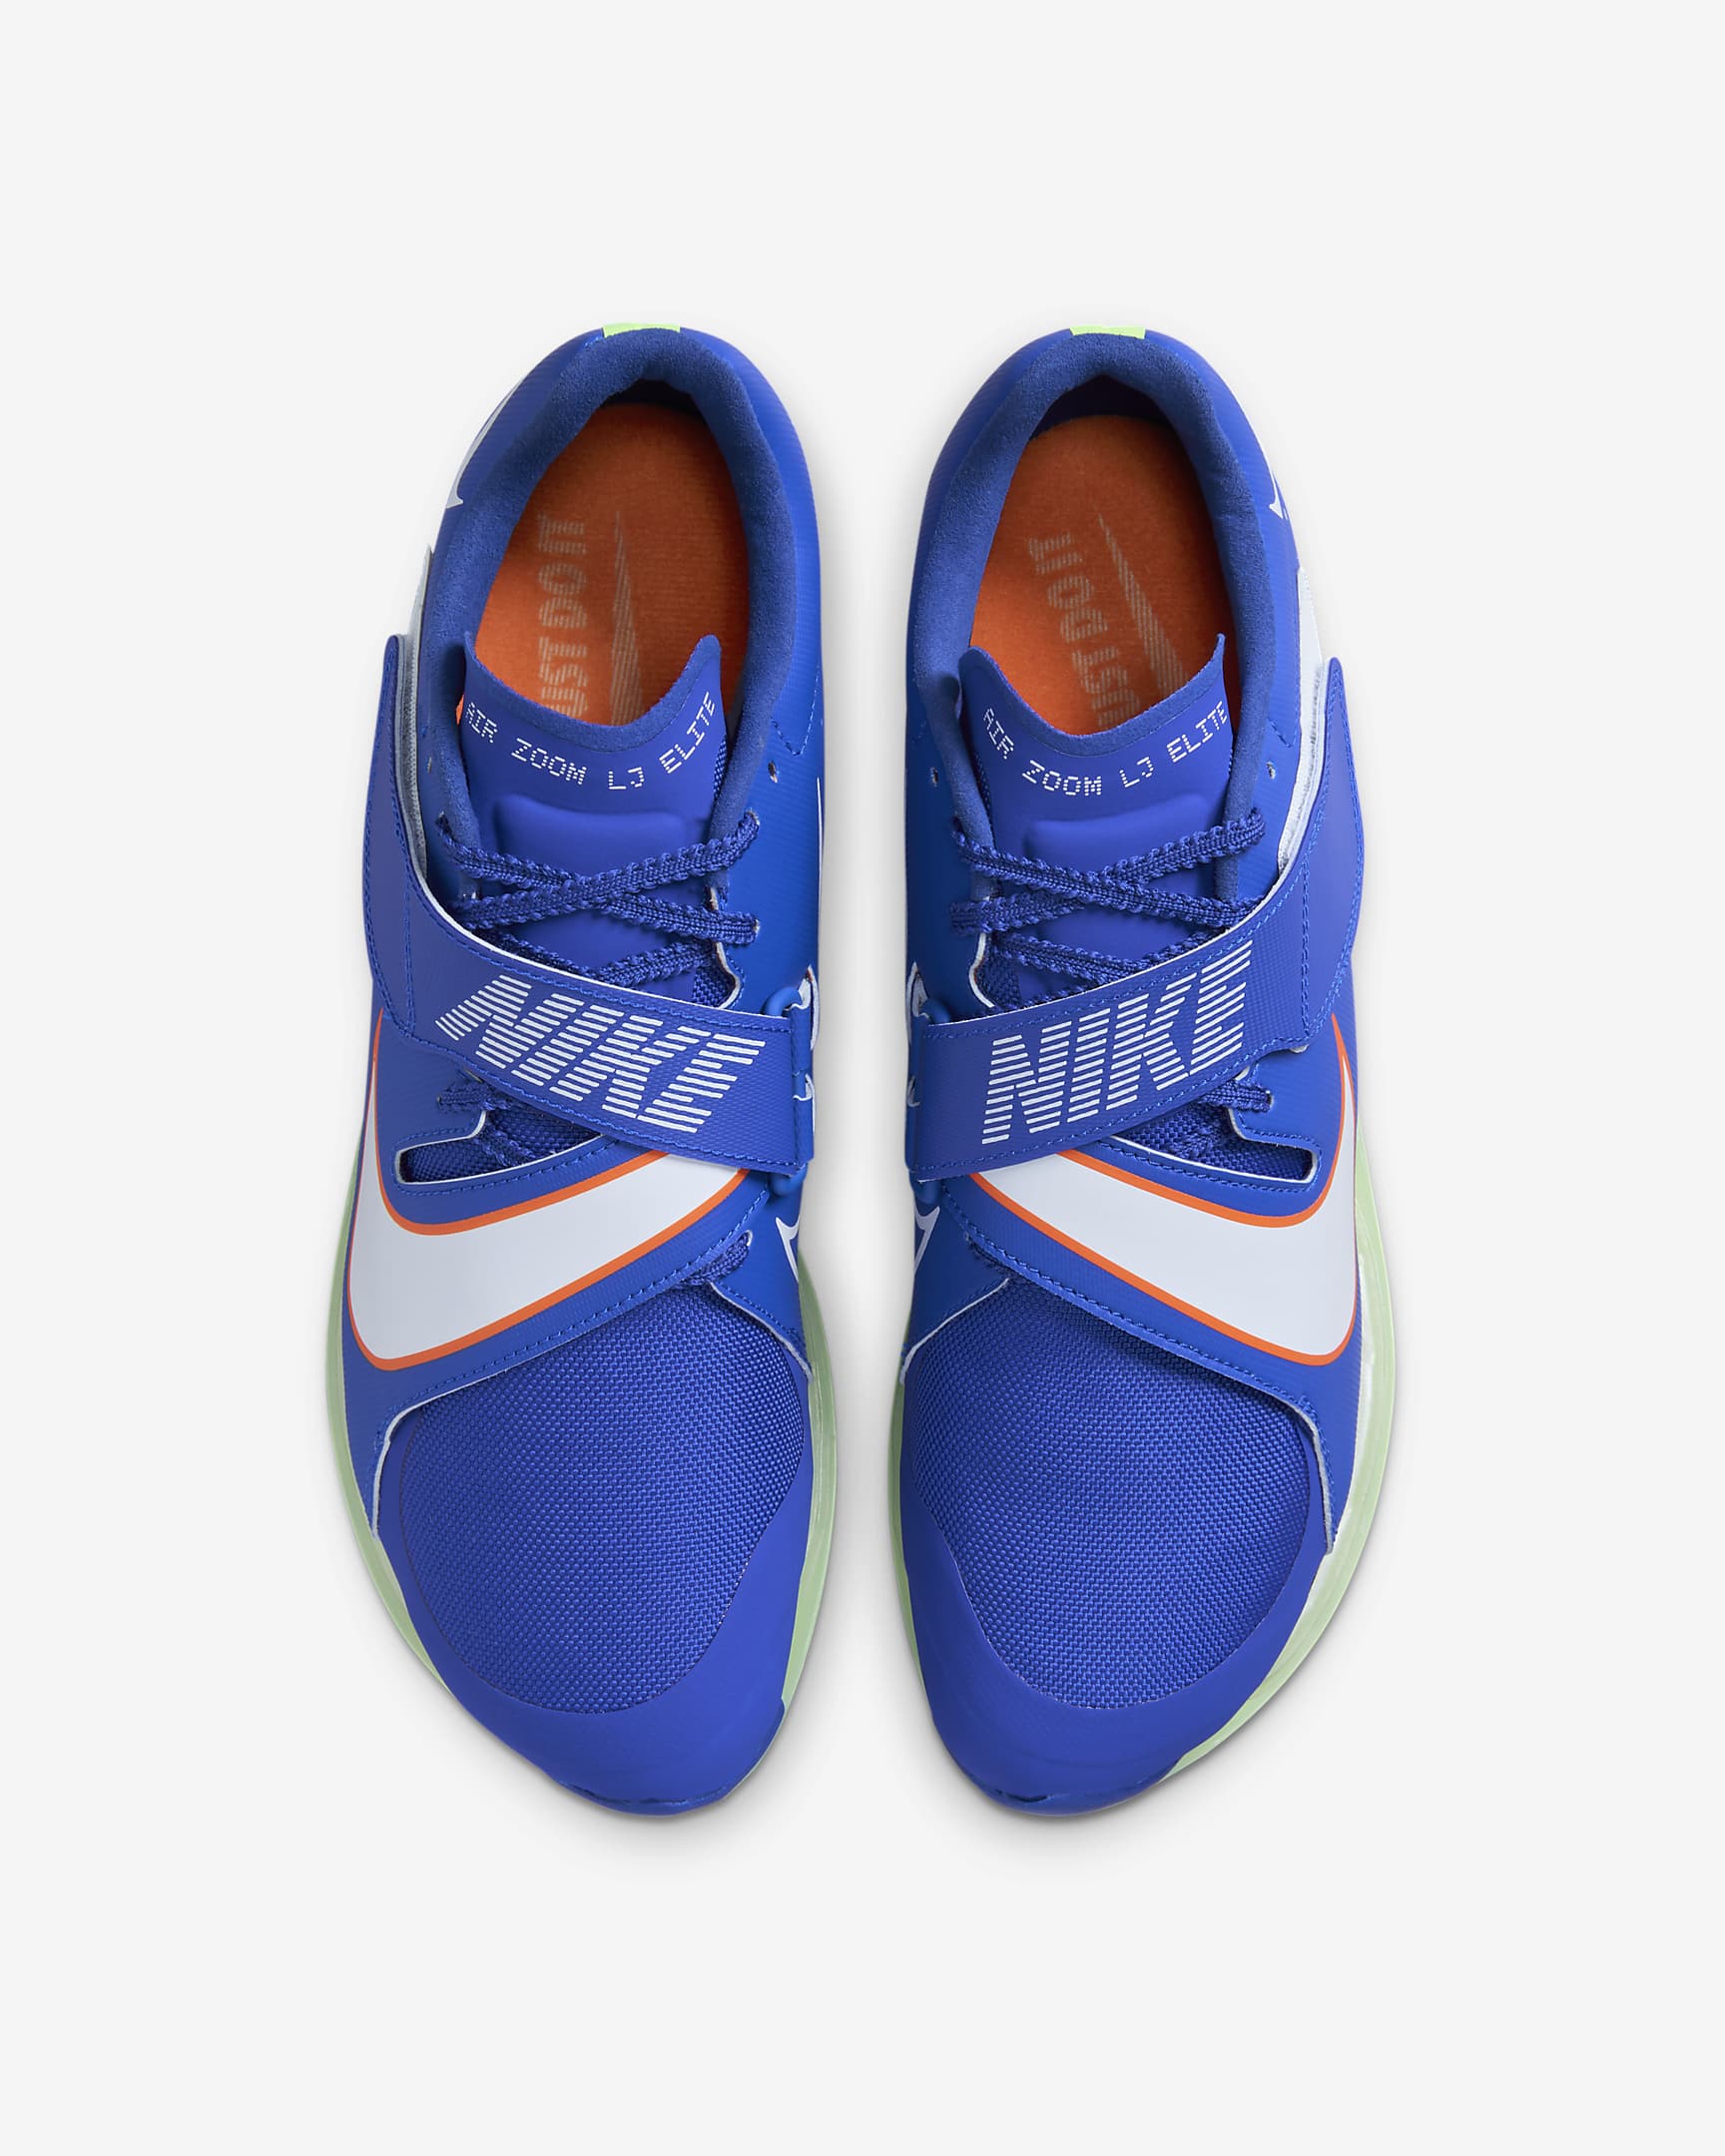 Nike Air Zoom LJ Elite Athletics Jumping Spikes - Racer Blue/Safety Orange/White